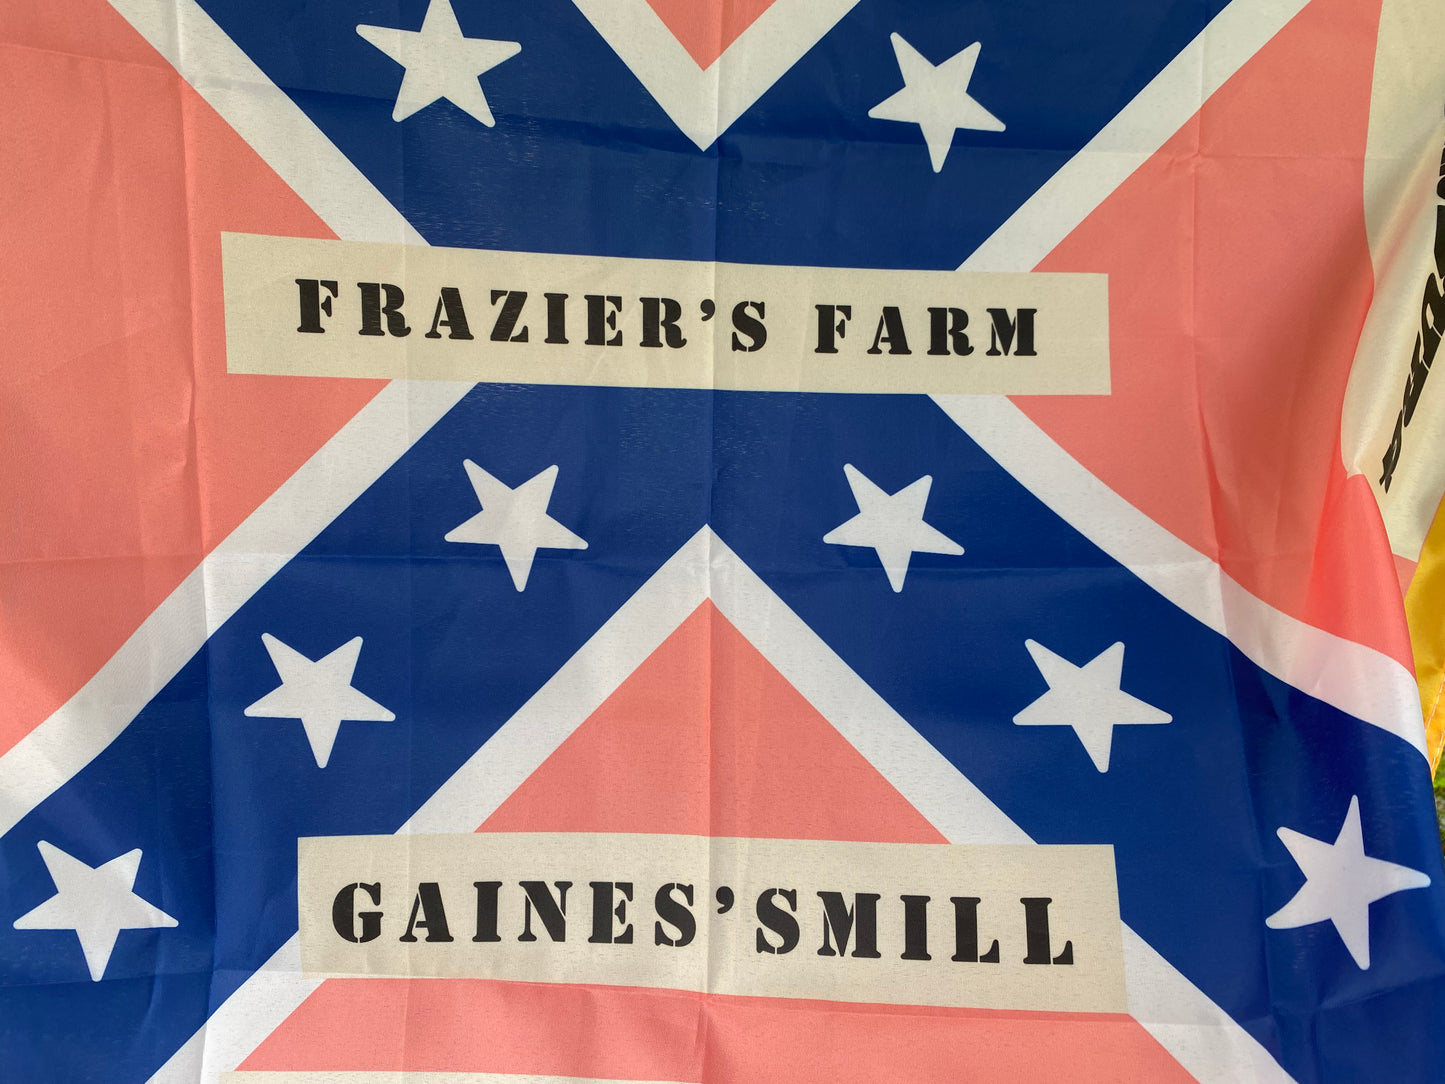 6th South Carolina "Silk Issue" Pink House Flag